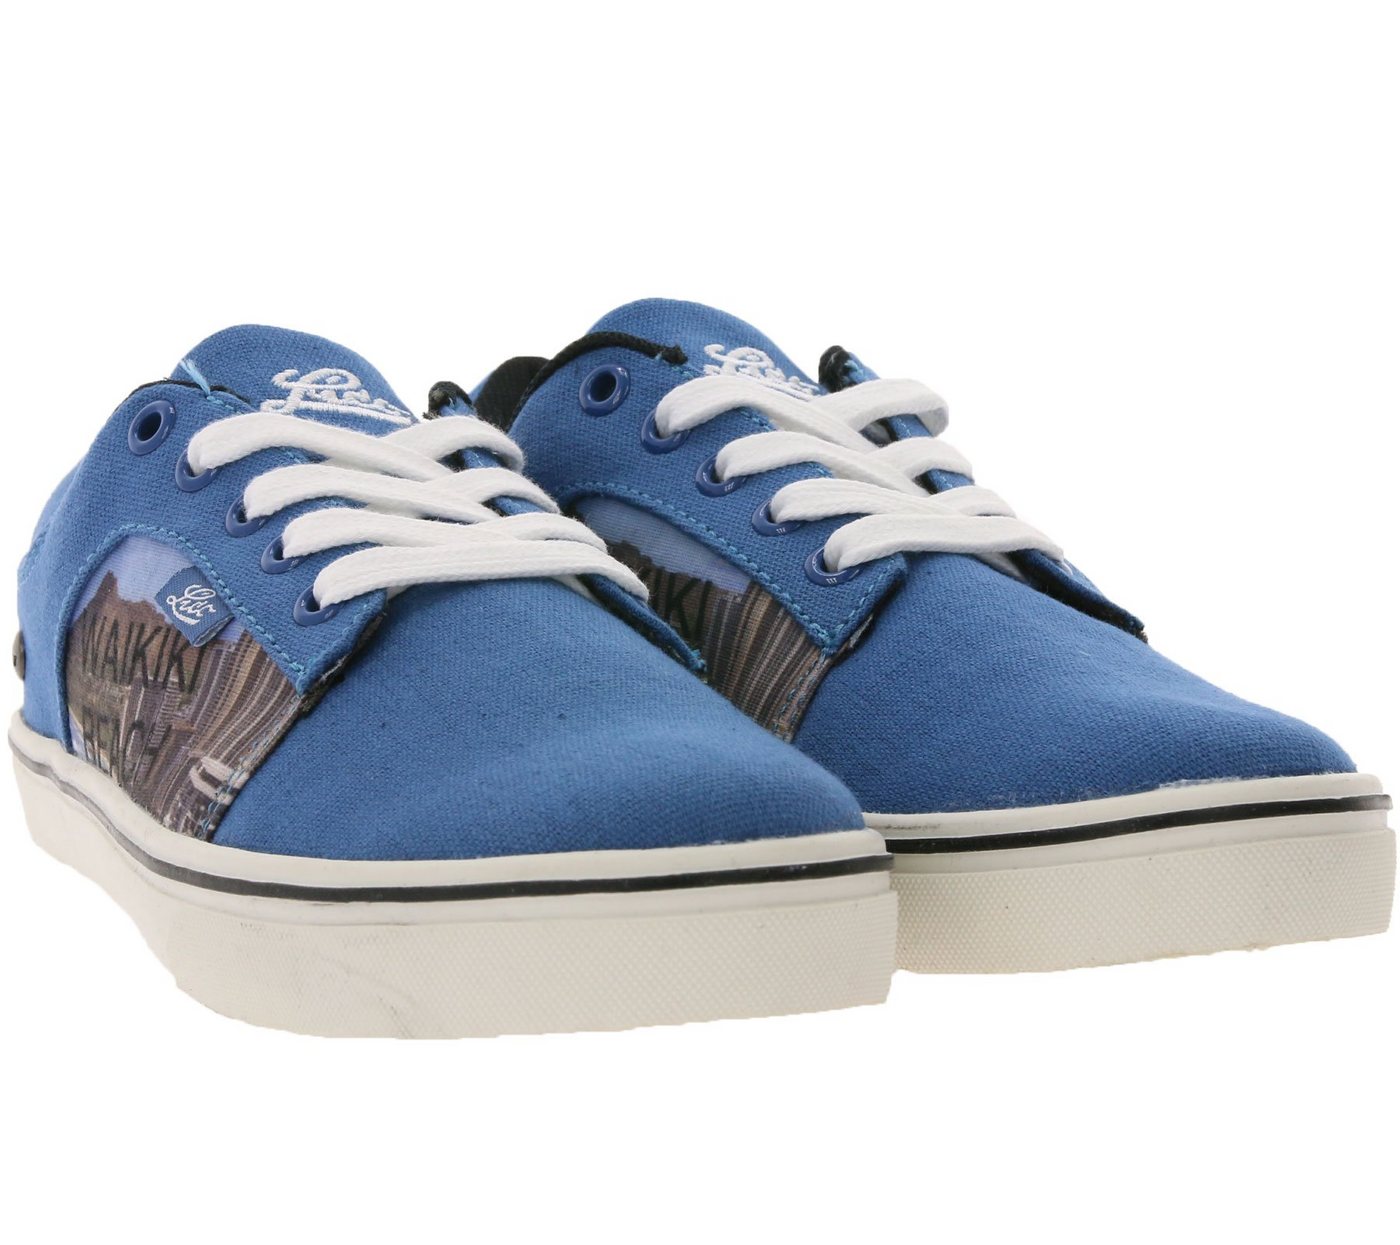 Lico LICO Sneaker stylische Turnschuhe Schuhe California Blau Sneaker von Lico